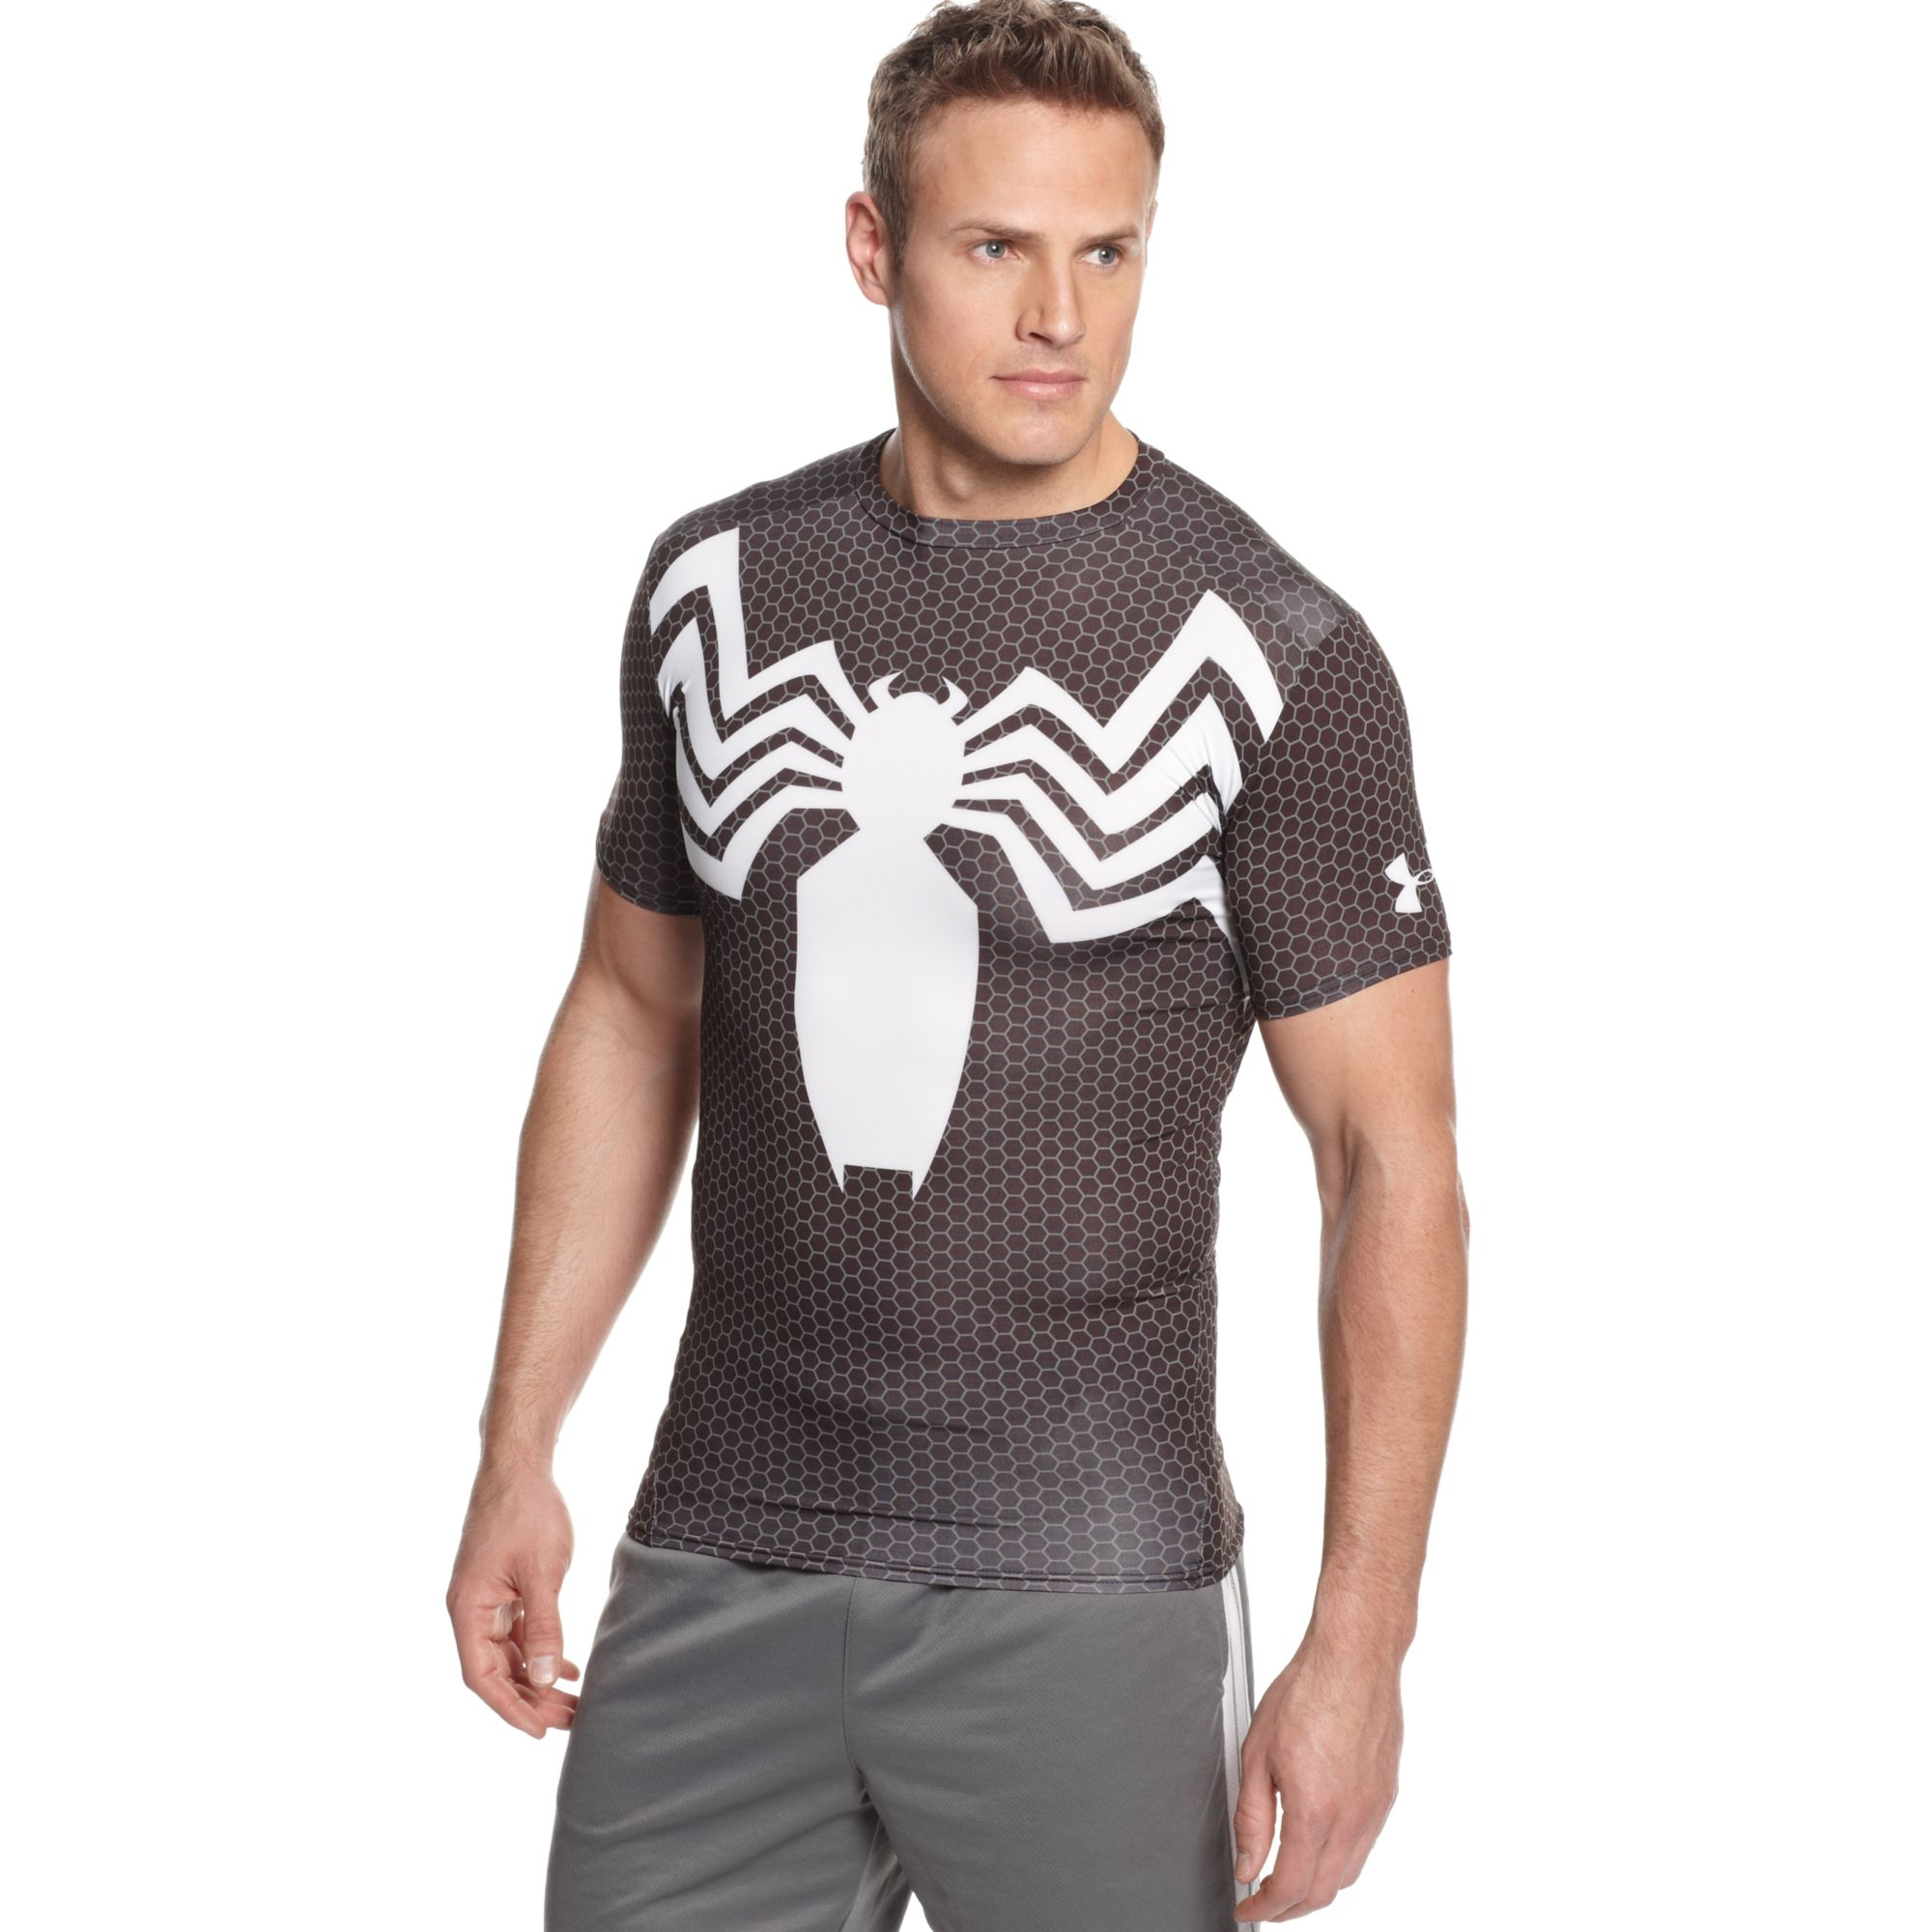 Under Armour Alter Ego Spiderman Compression Tshirt in Black for Men - Lyst